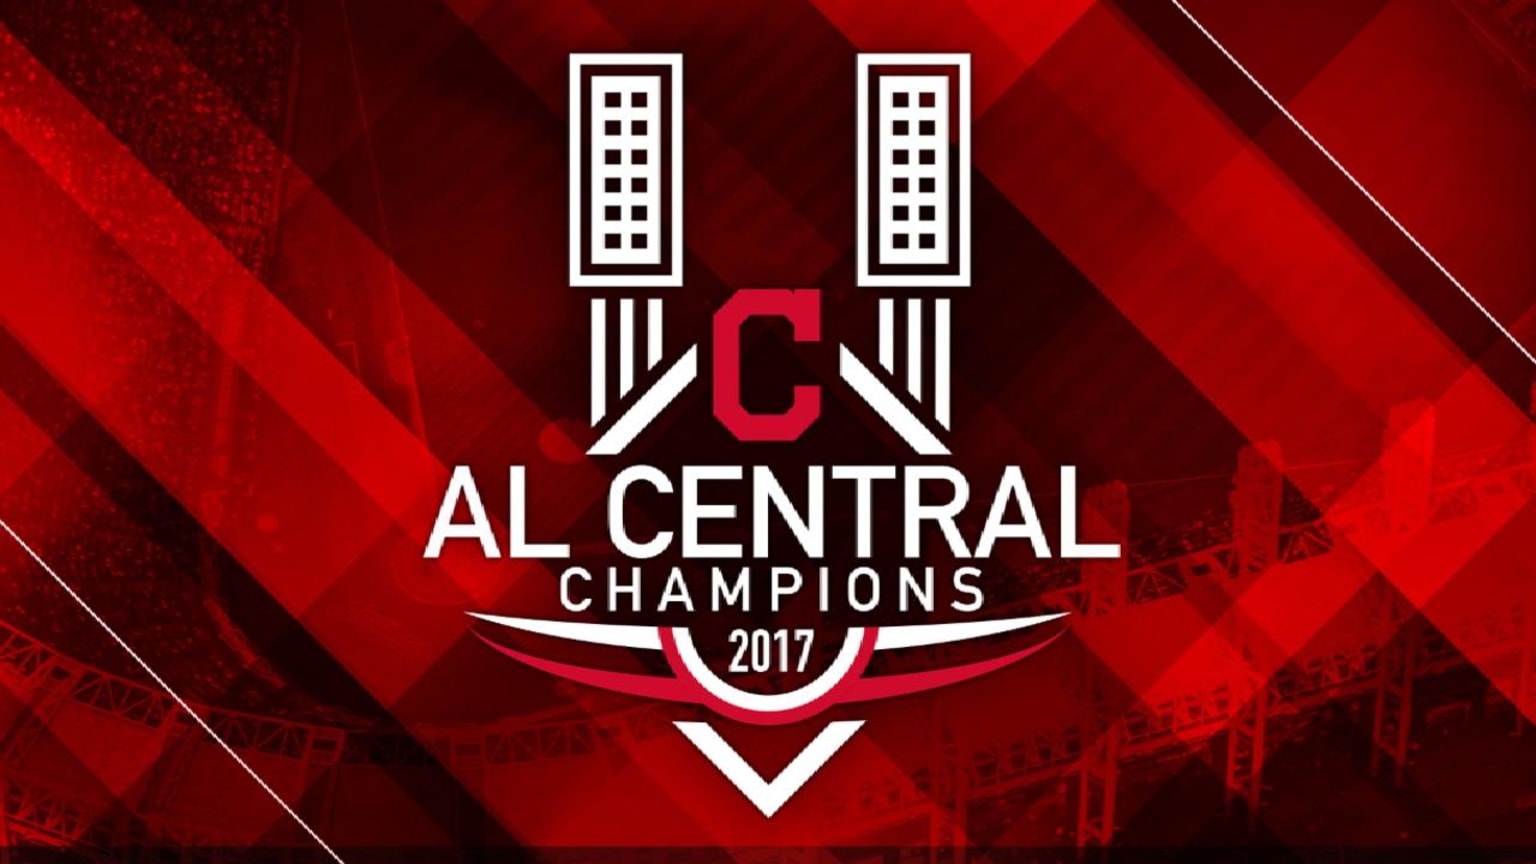 AL Central champs - again, 09/17/2017